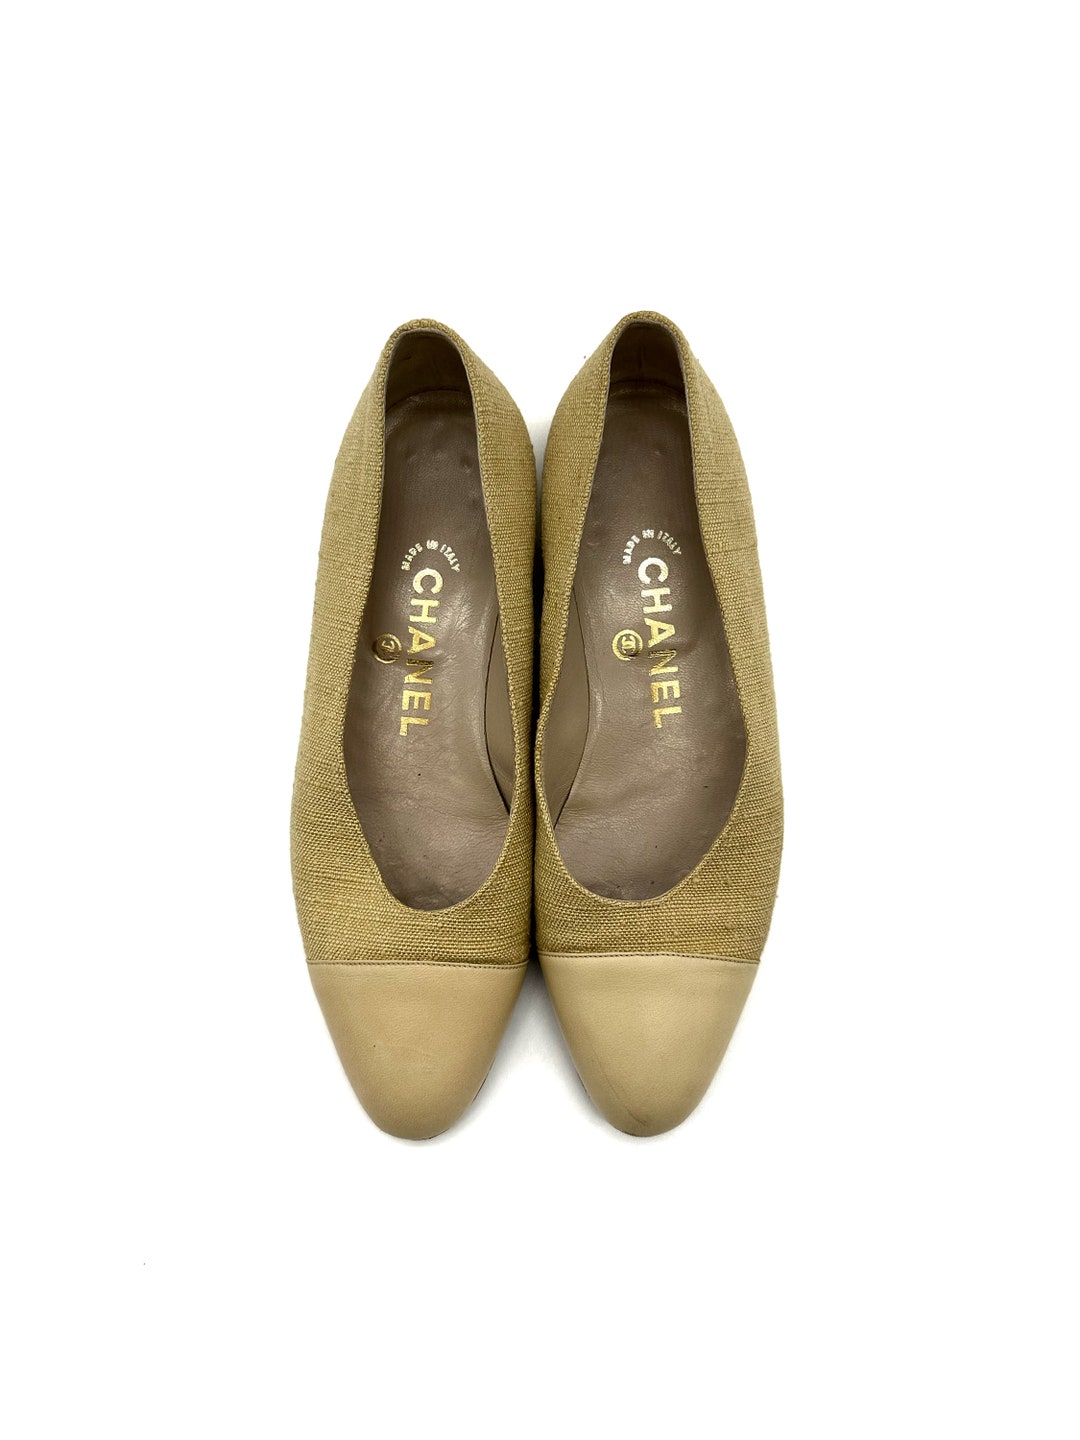 Chanel Size EU36/6 Vintage Flats Beige Canvas Almond Toe Slip 